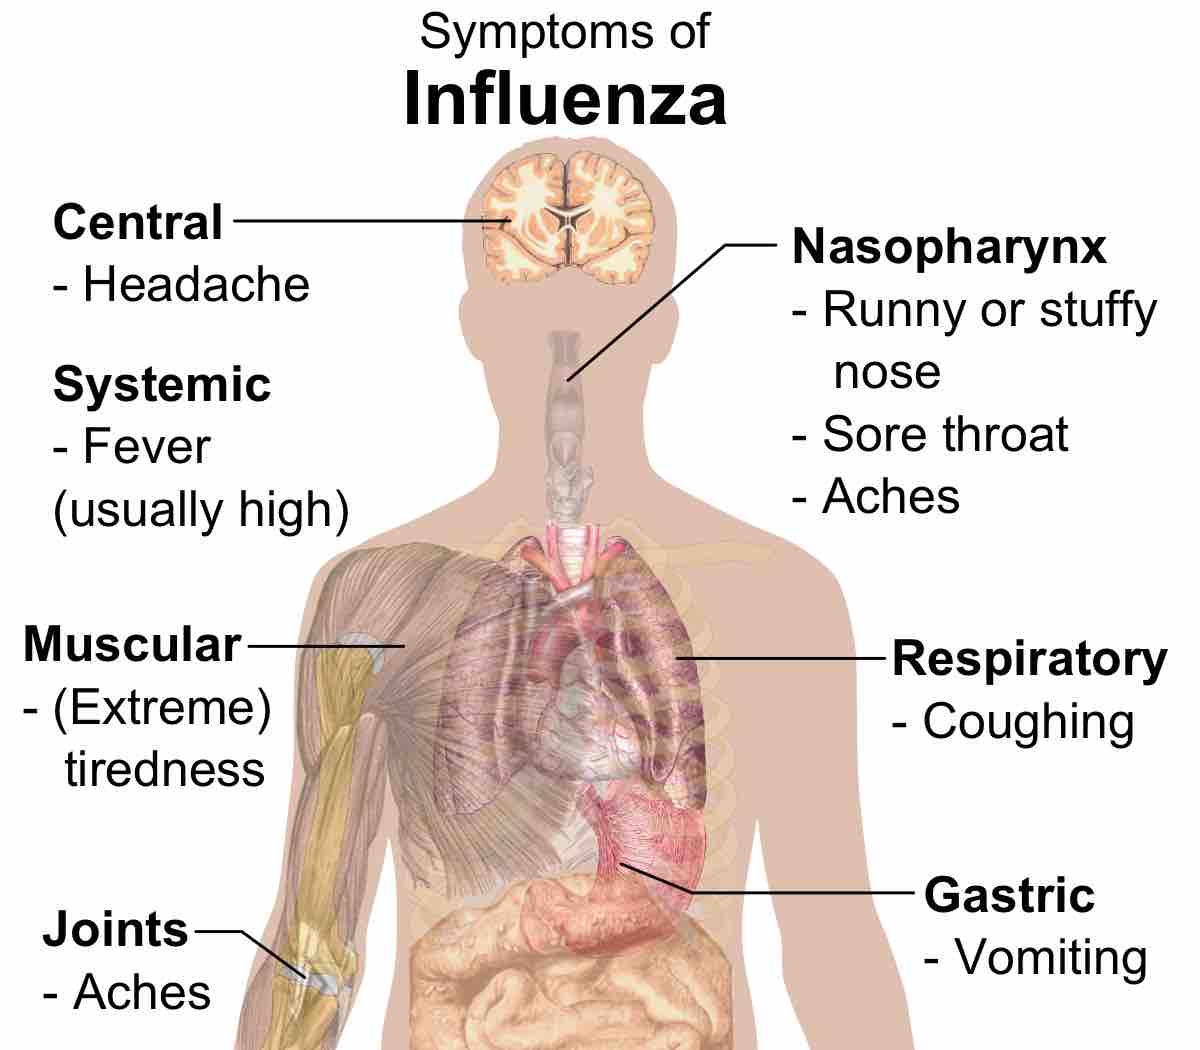 Symptoms of influenza